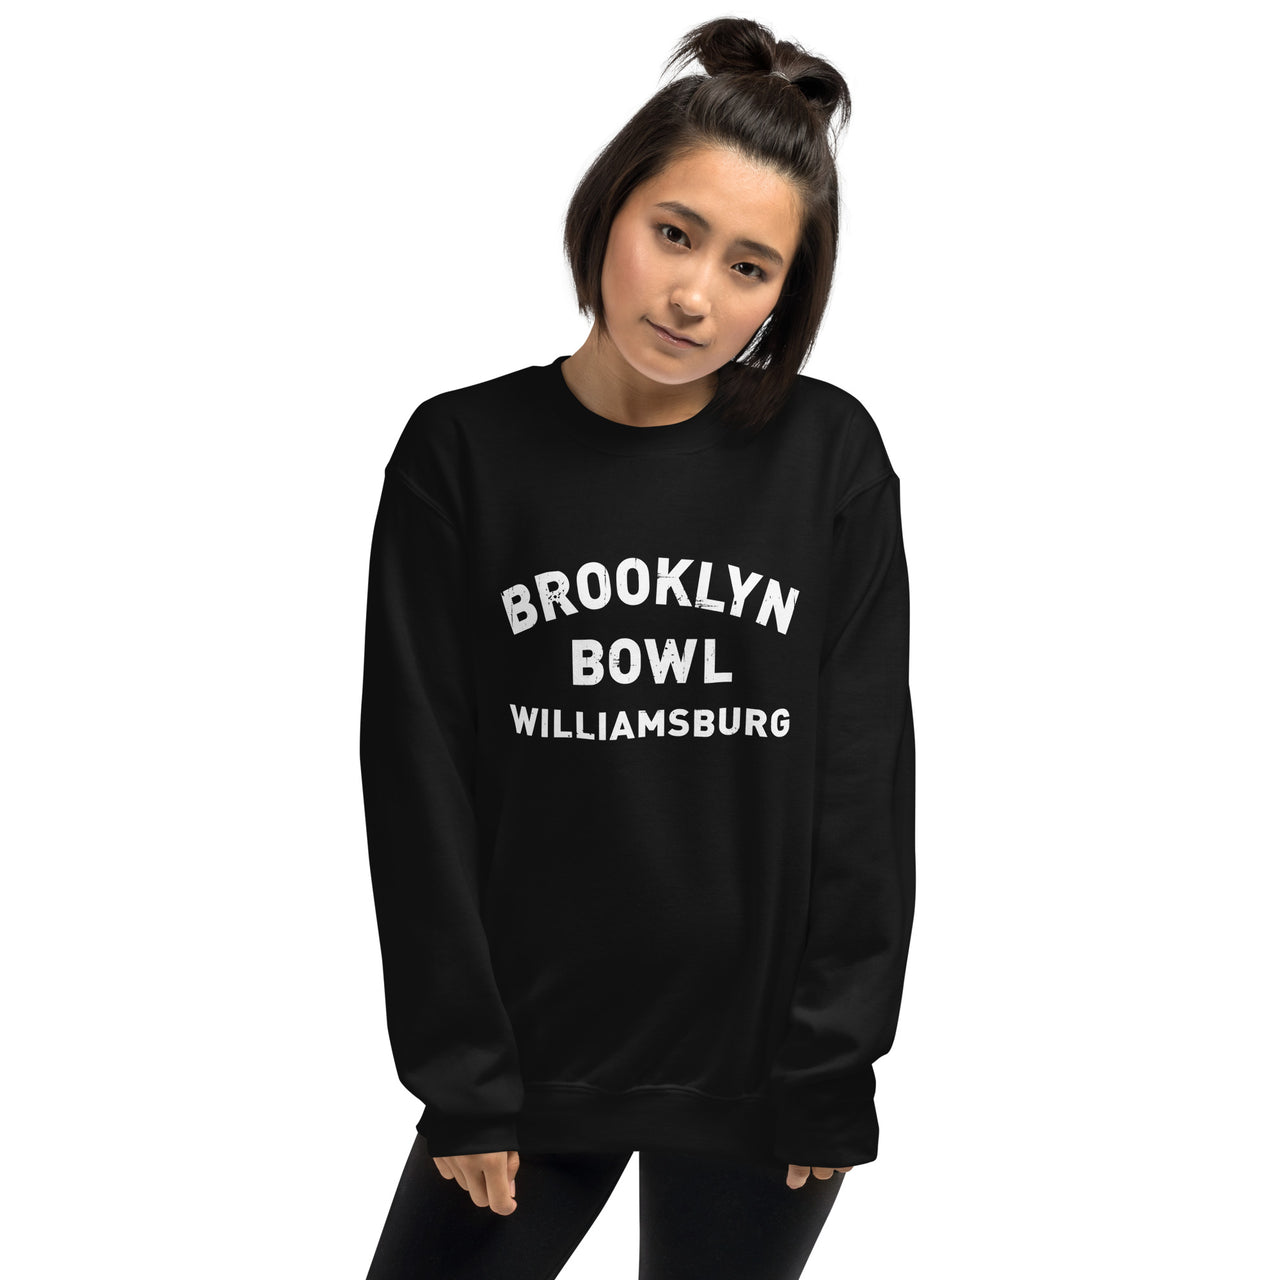 Brooklyn Bowl Williamsburg Crewneck Sweatshirt